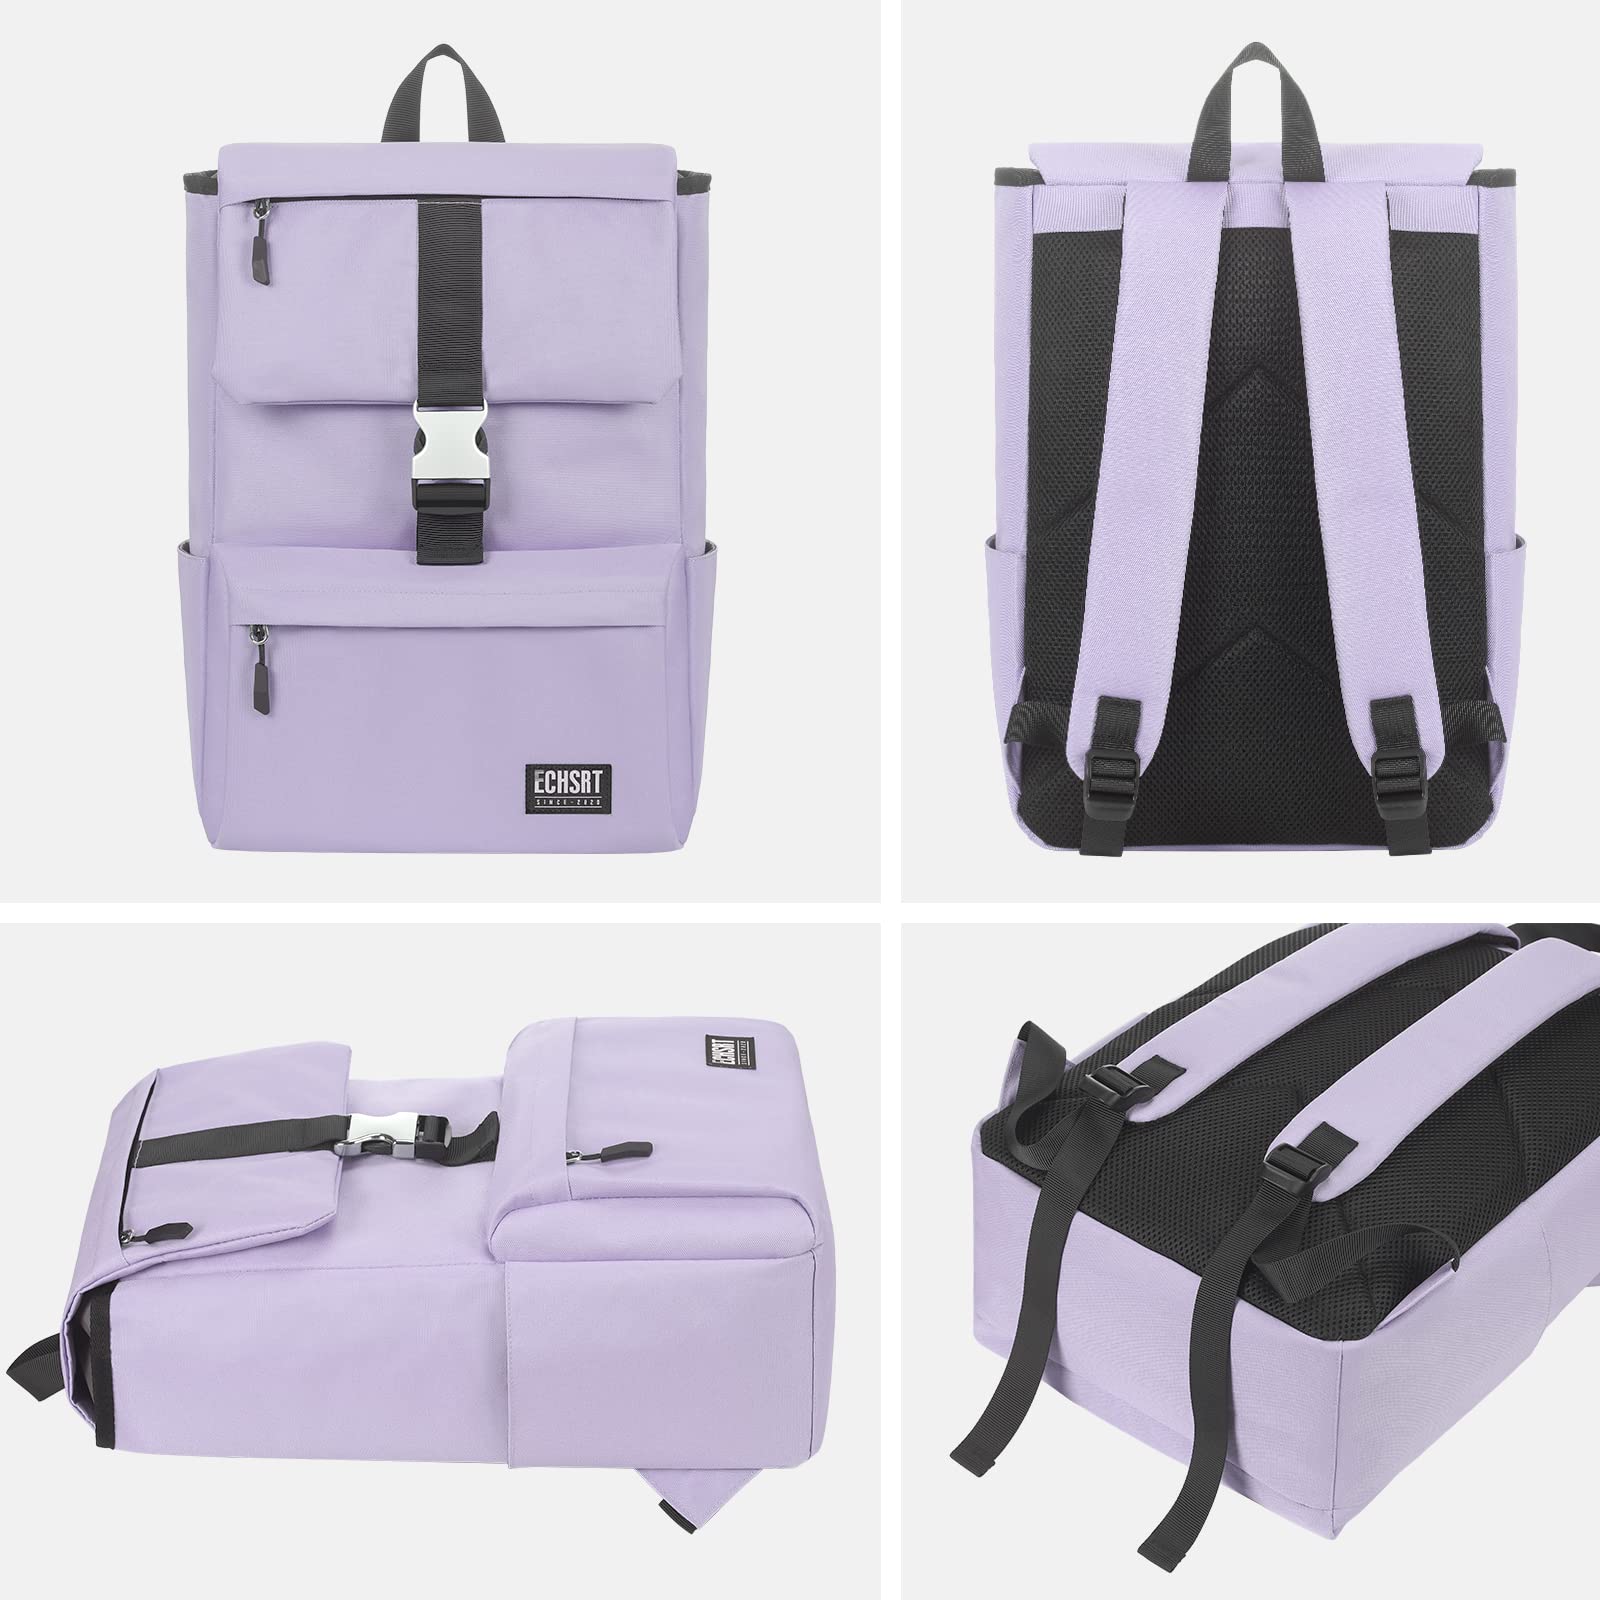 ECHSRT Laptop Backpack for Women 16-inch Water Resistant Business Travel Daypack College School Bookbag for Men Purple